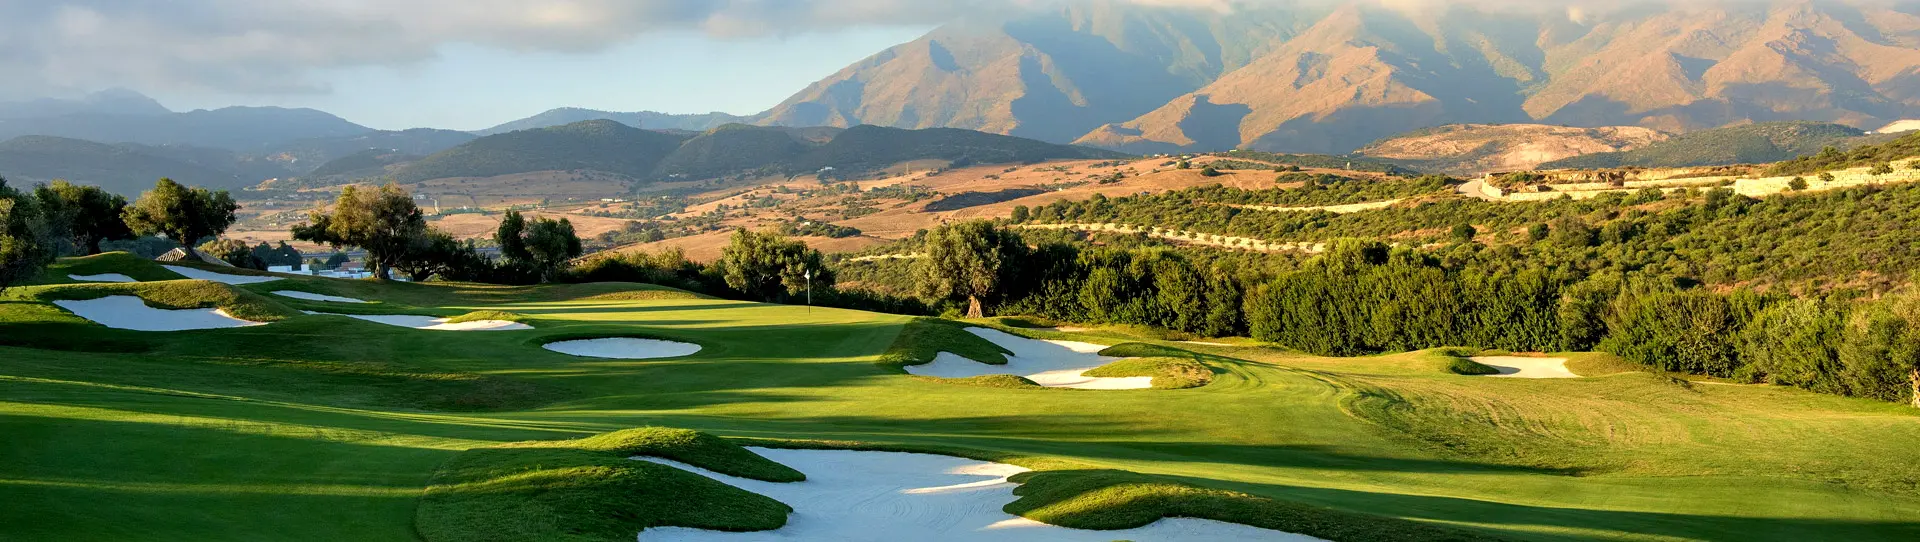 Spain golf courses - Finca Cortesin Golf - Photo 1